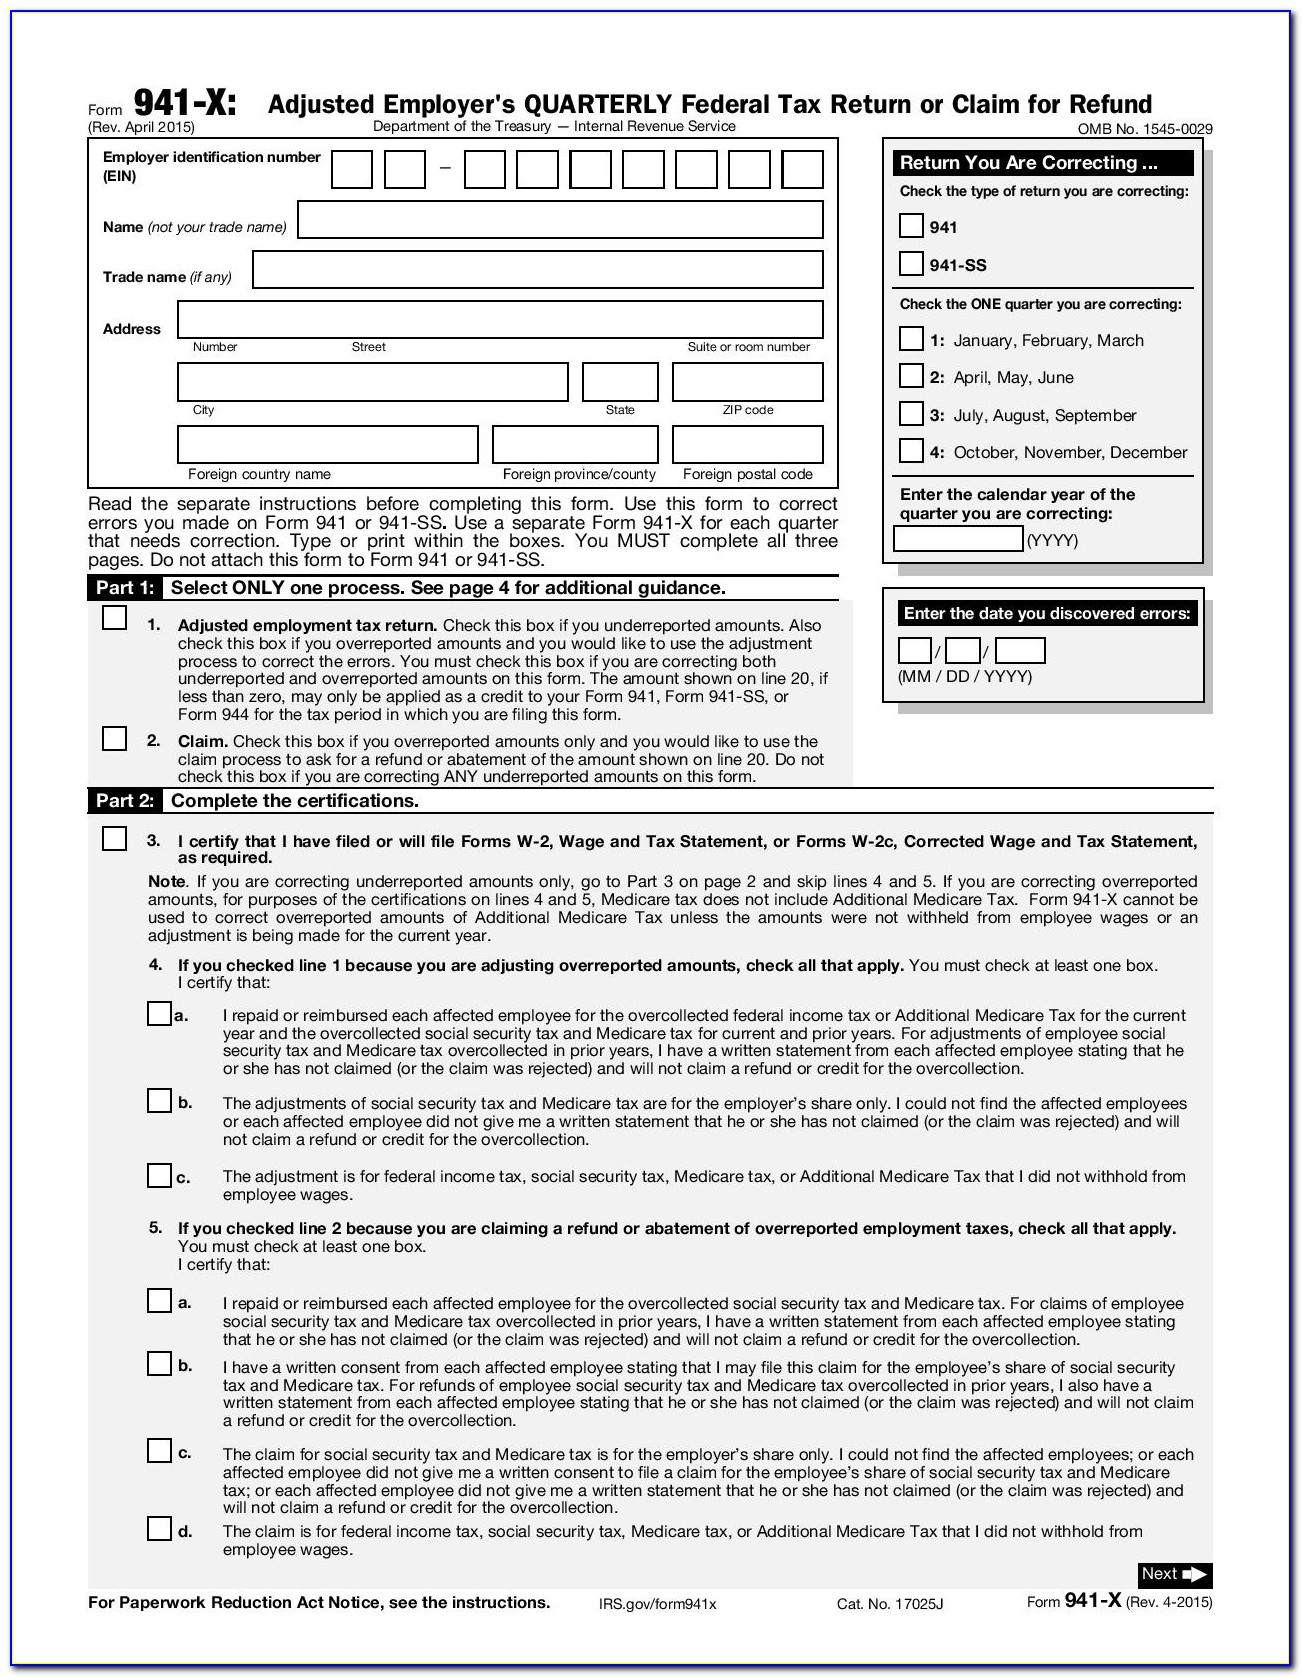 Irs.gov Form 941 Mailing Address